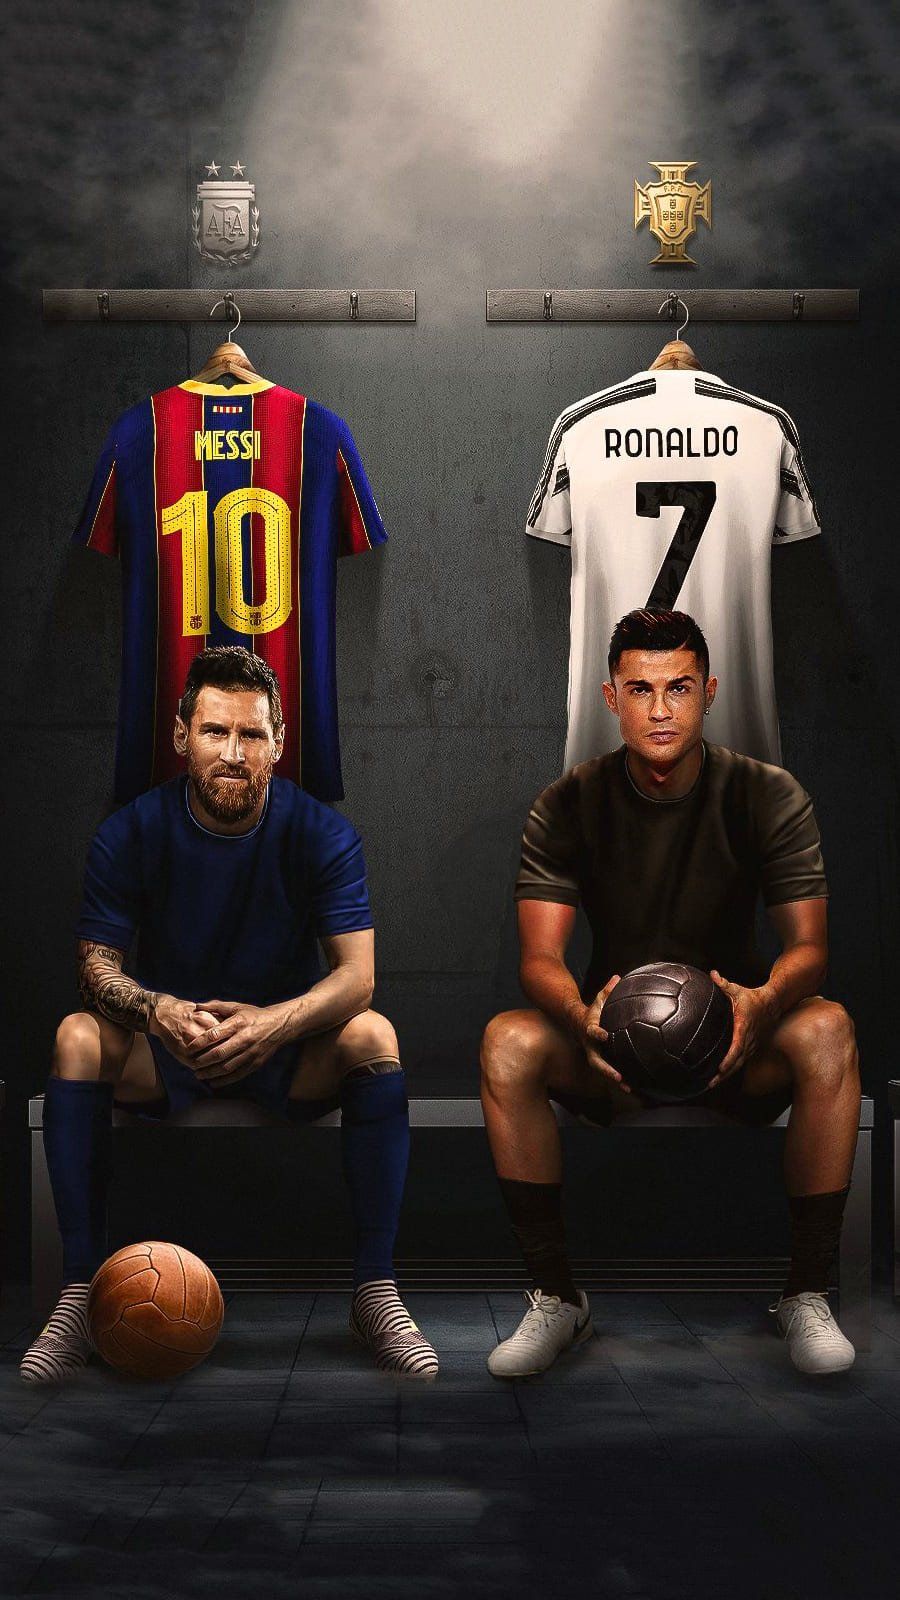 Ronaldo and messi aesthetic Wallpaper Download